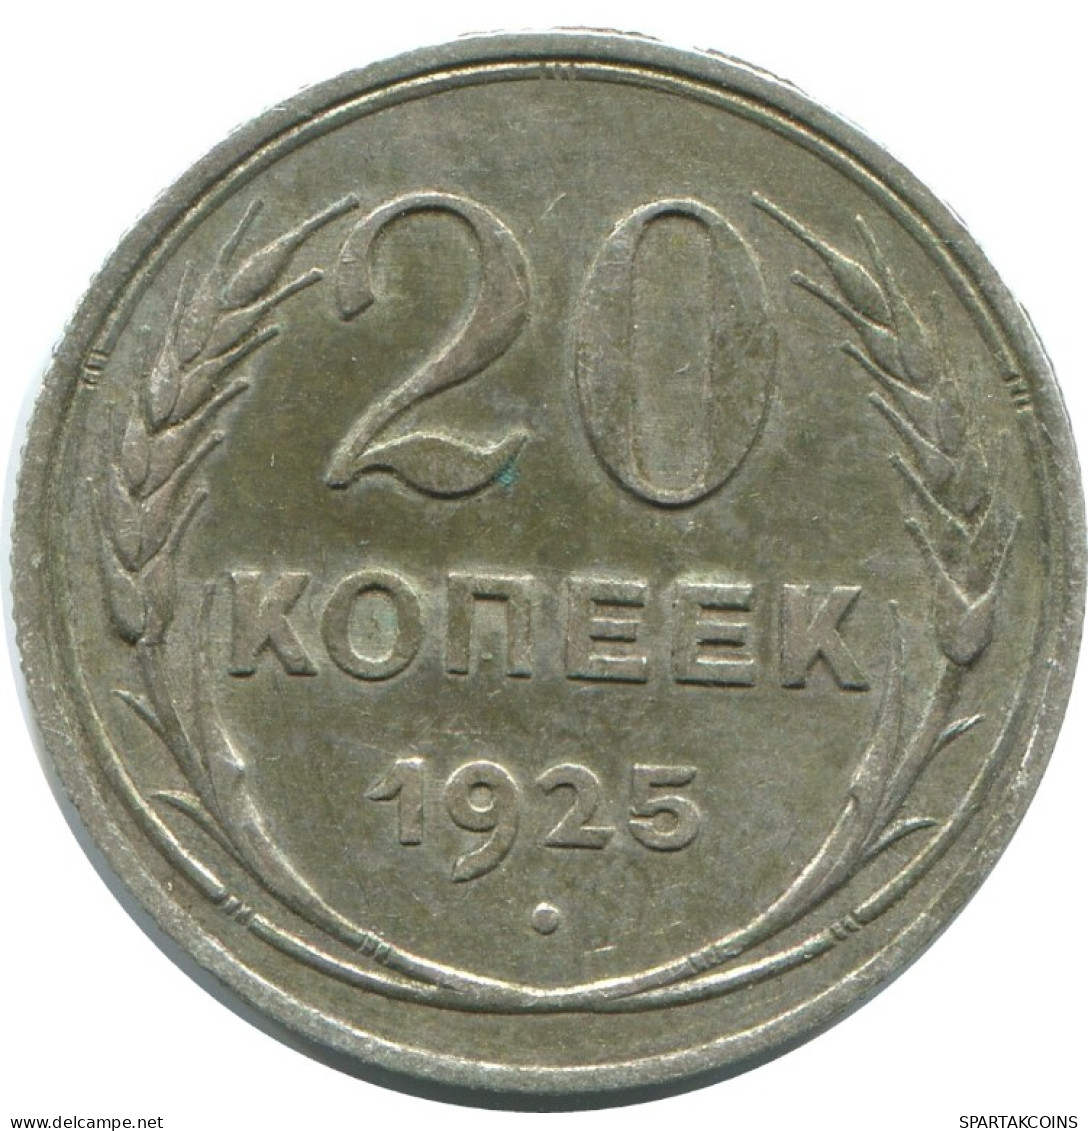 20 KOPEKS 1925 RUSSIA USSR SILVER Coin HIGH GRADE #AF308.4.U.A - Russia